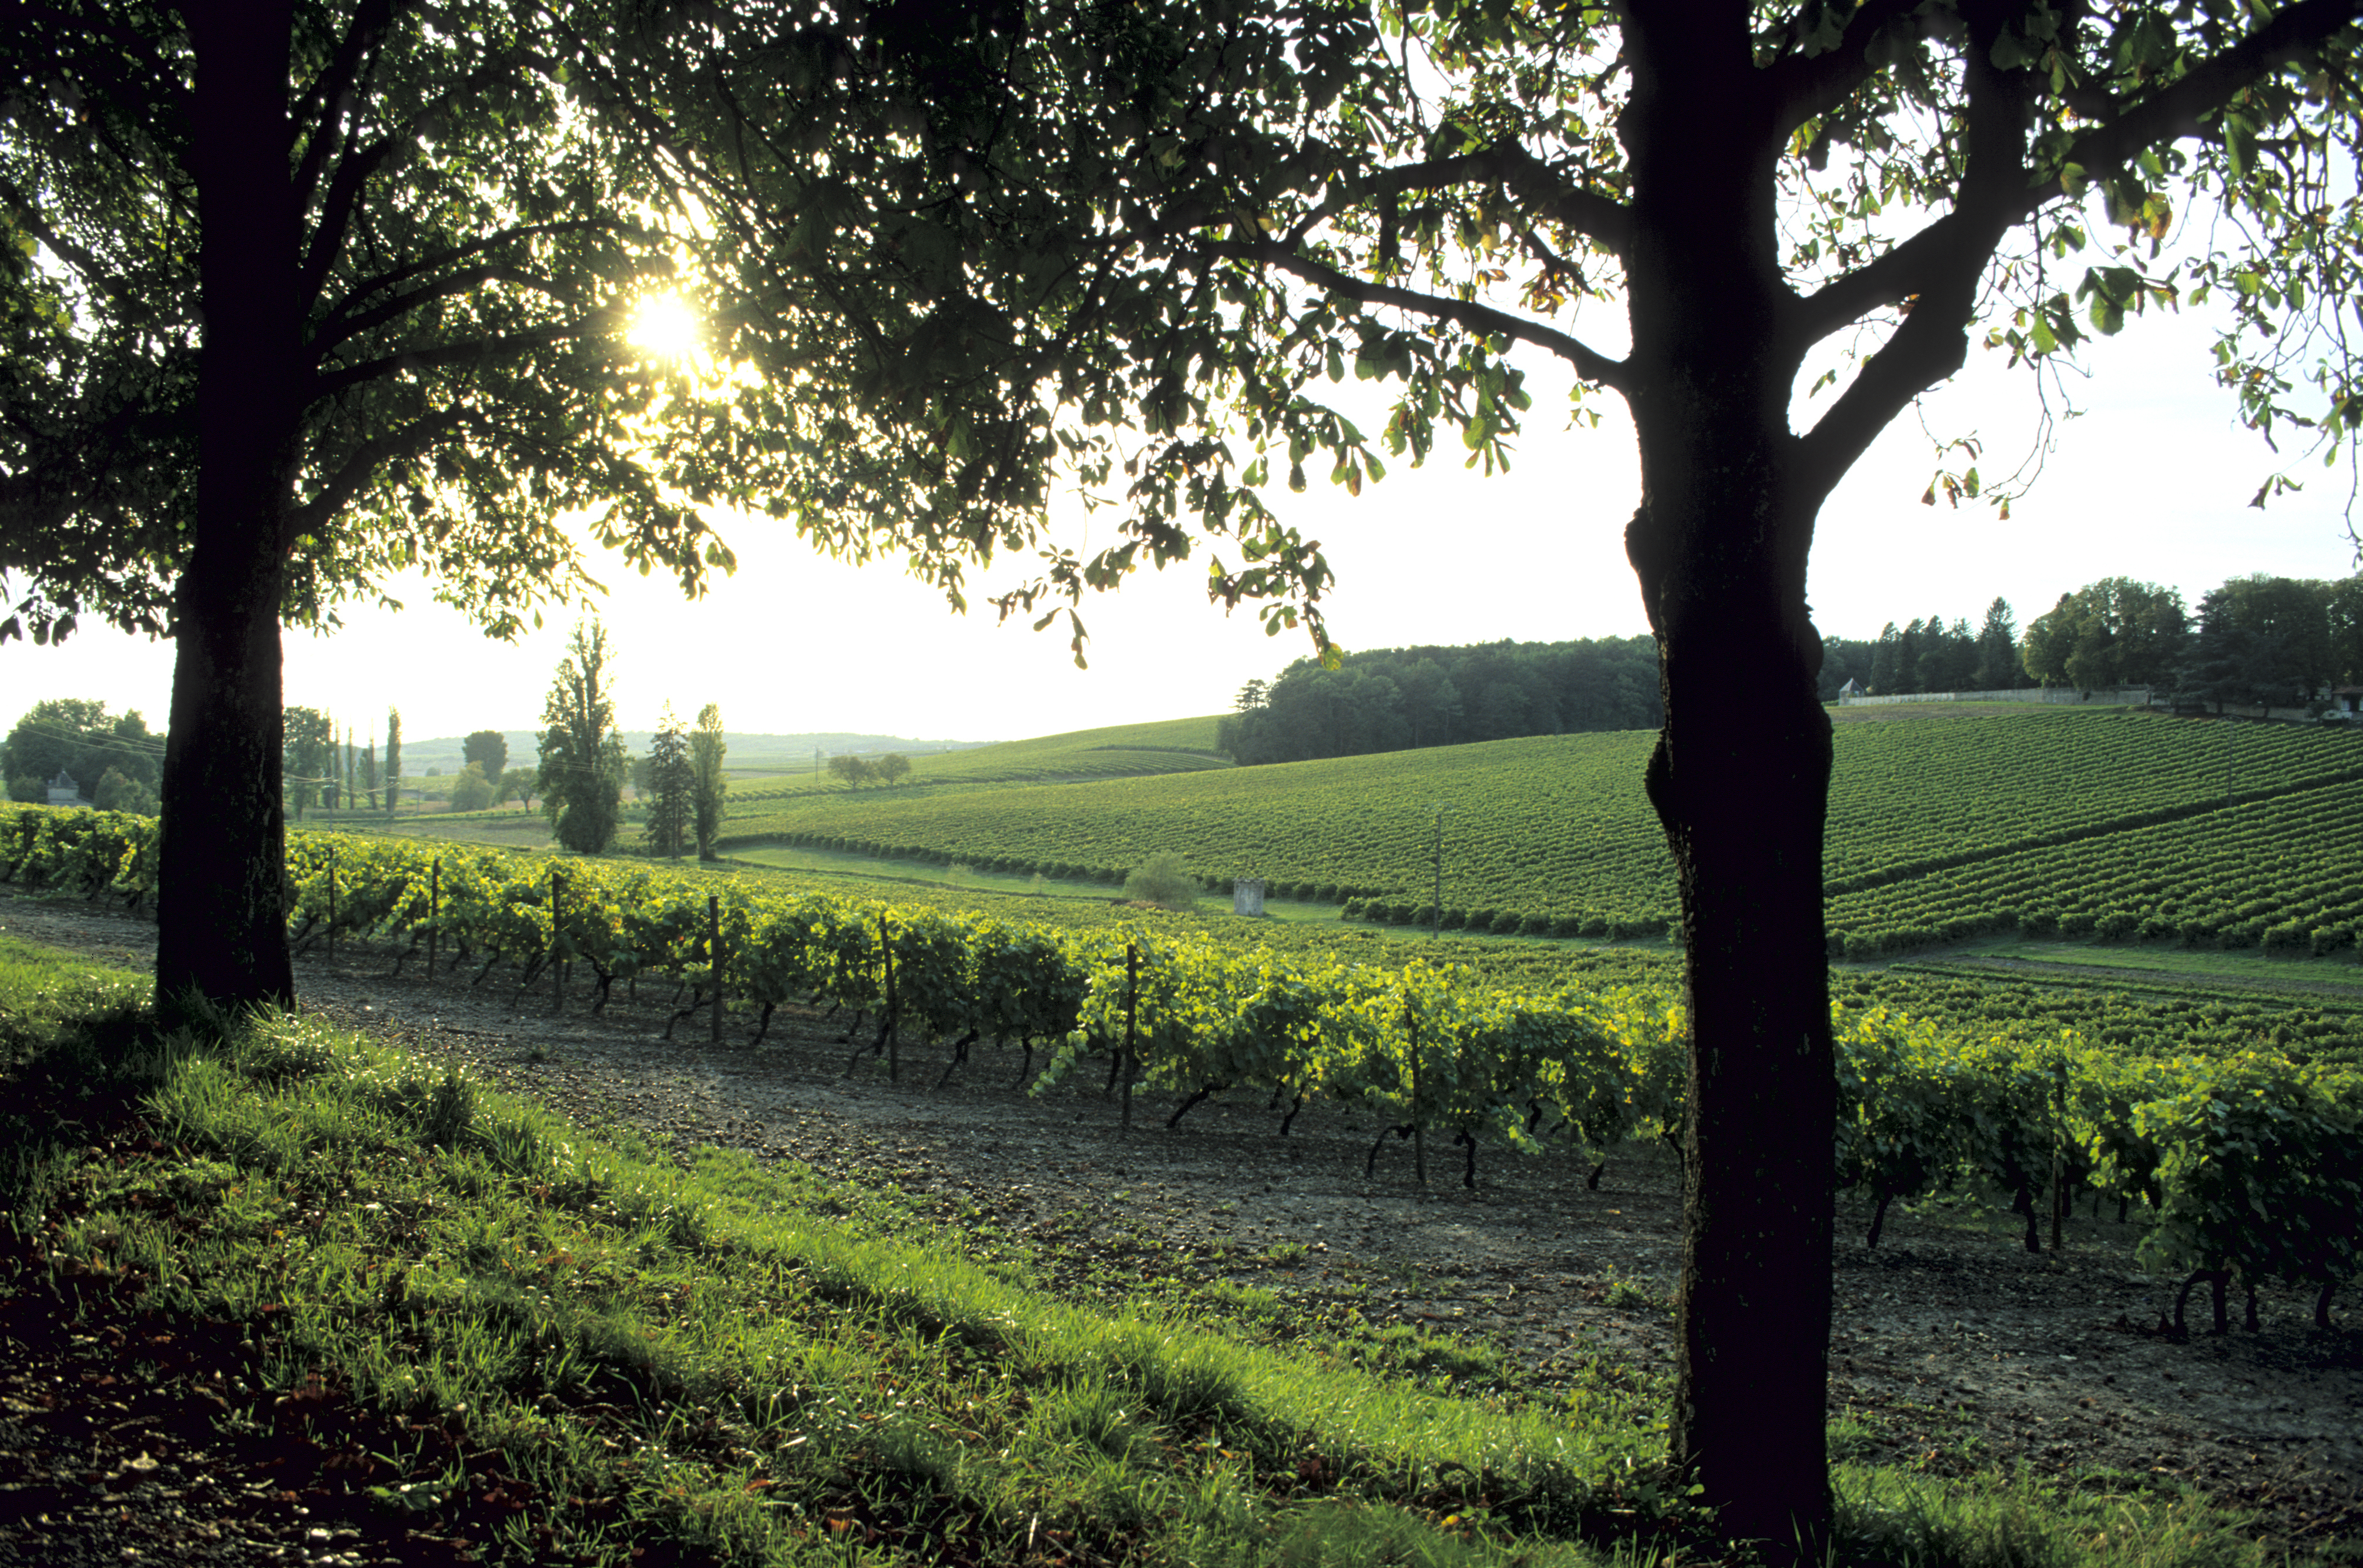 Vineyard in France,Charente.